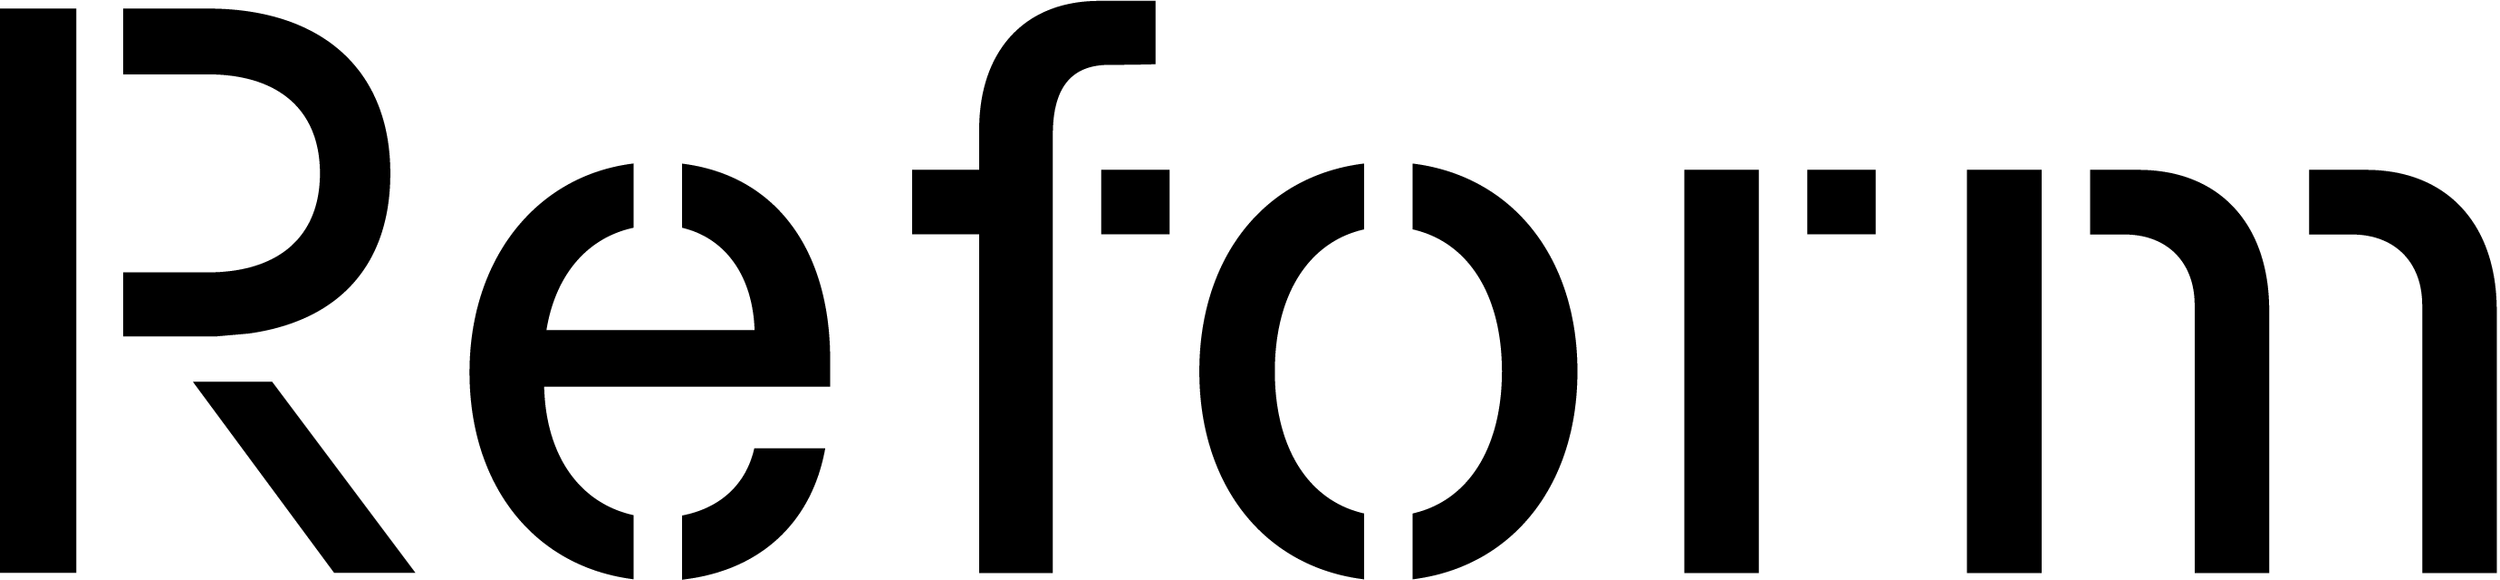 reform logo